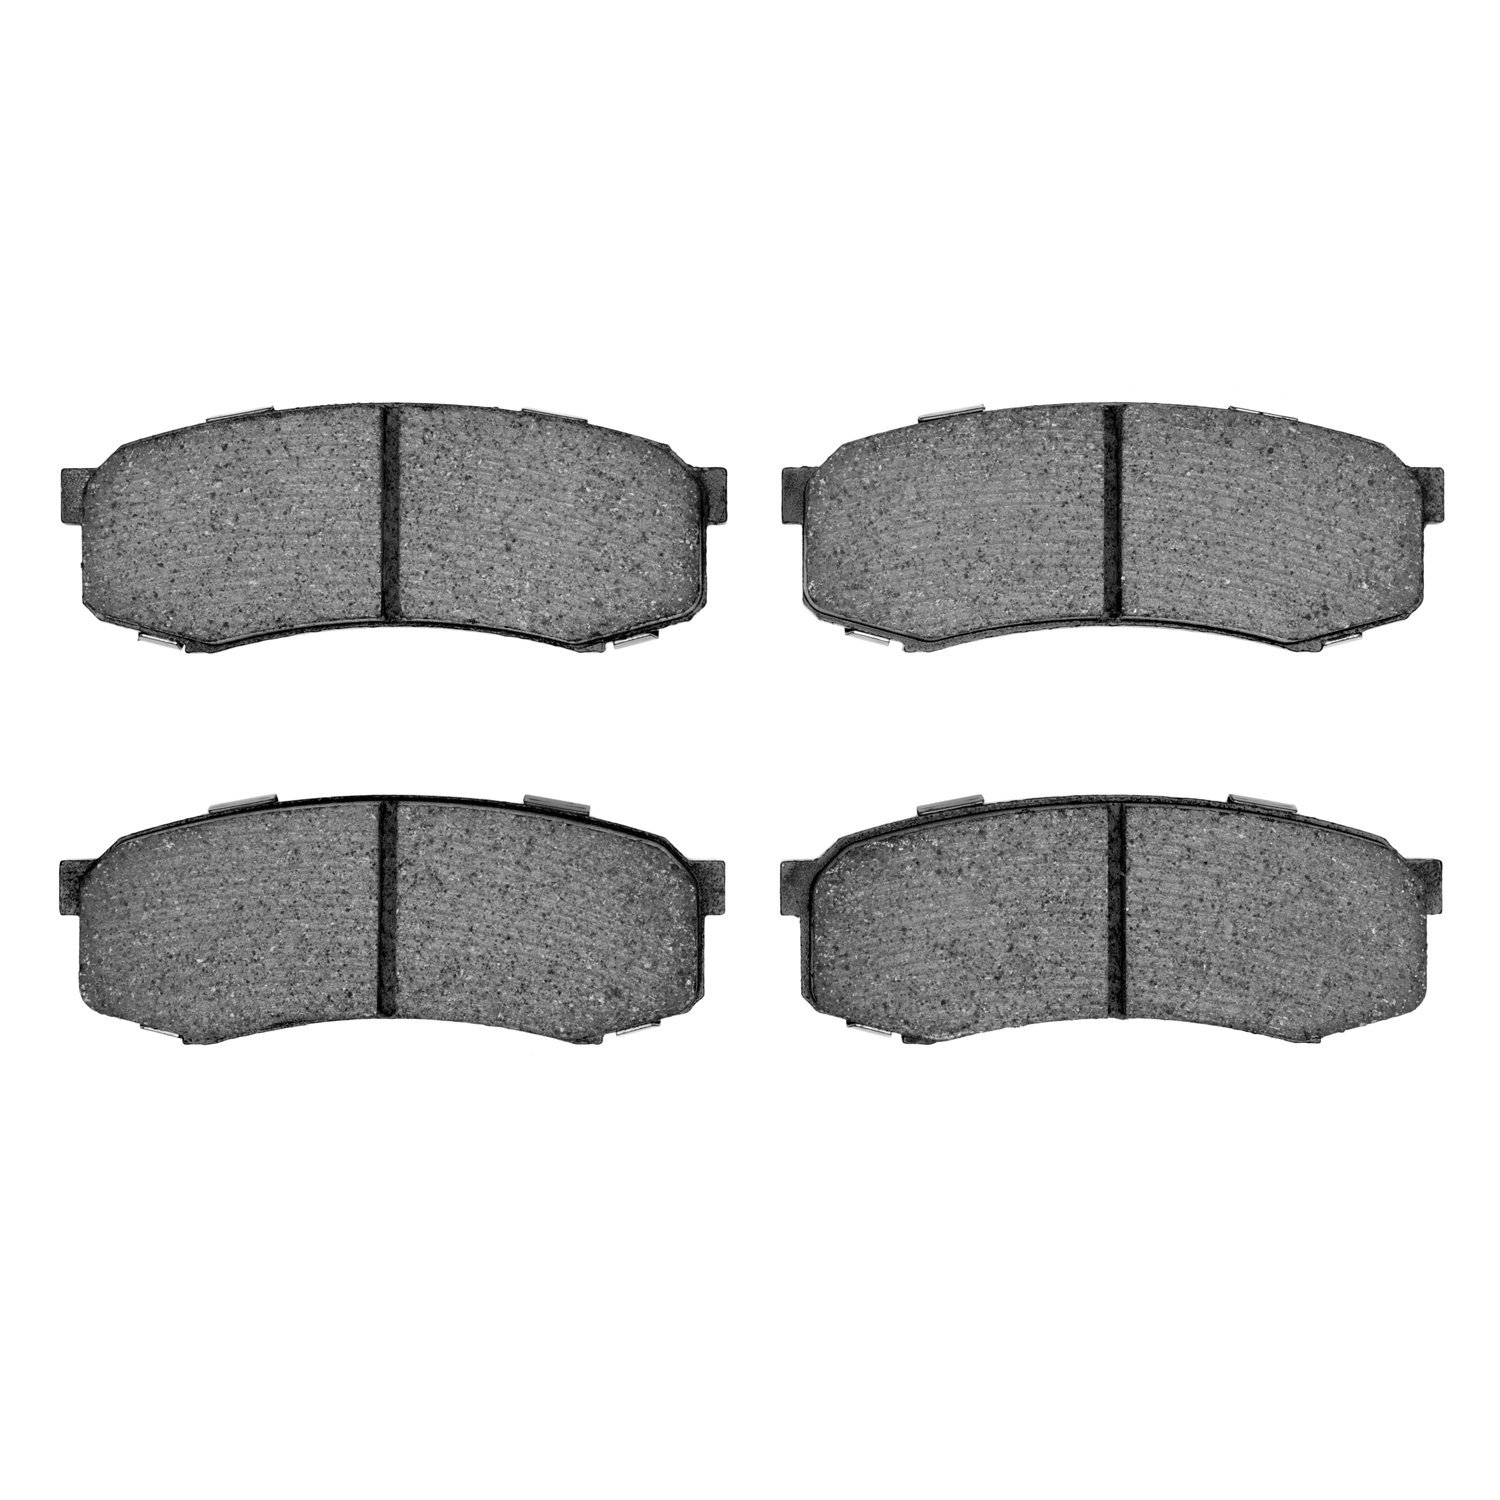 1551-0606-00 5000 Advanced Ceramic Brake Pads, Fits Select Multiple Makes/Models, Position: Rear